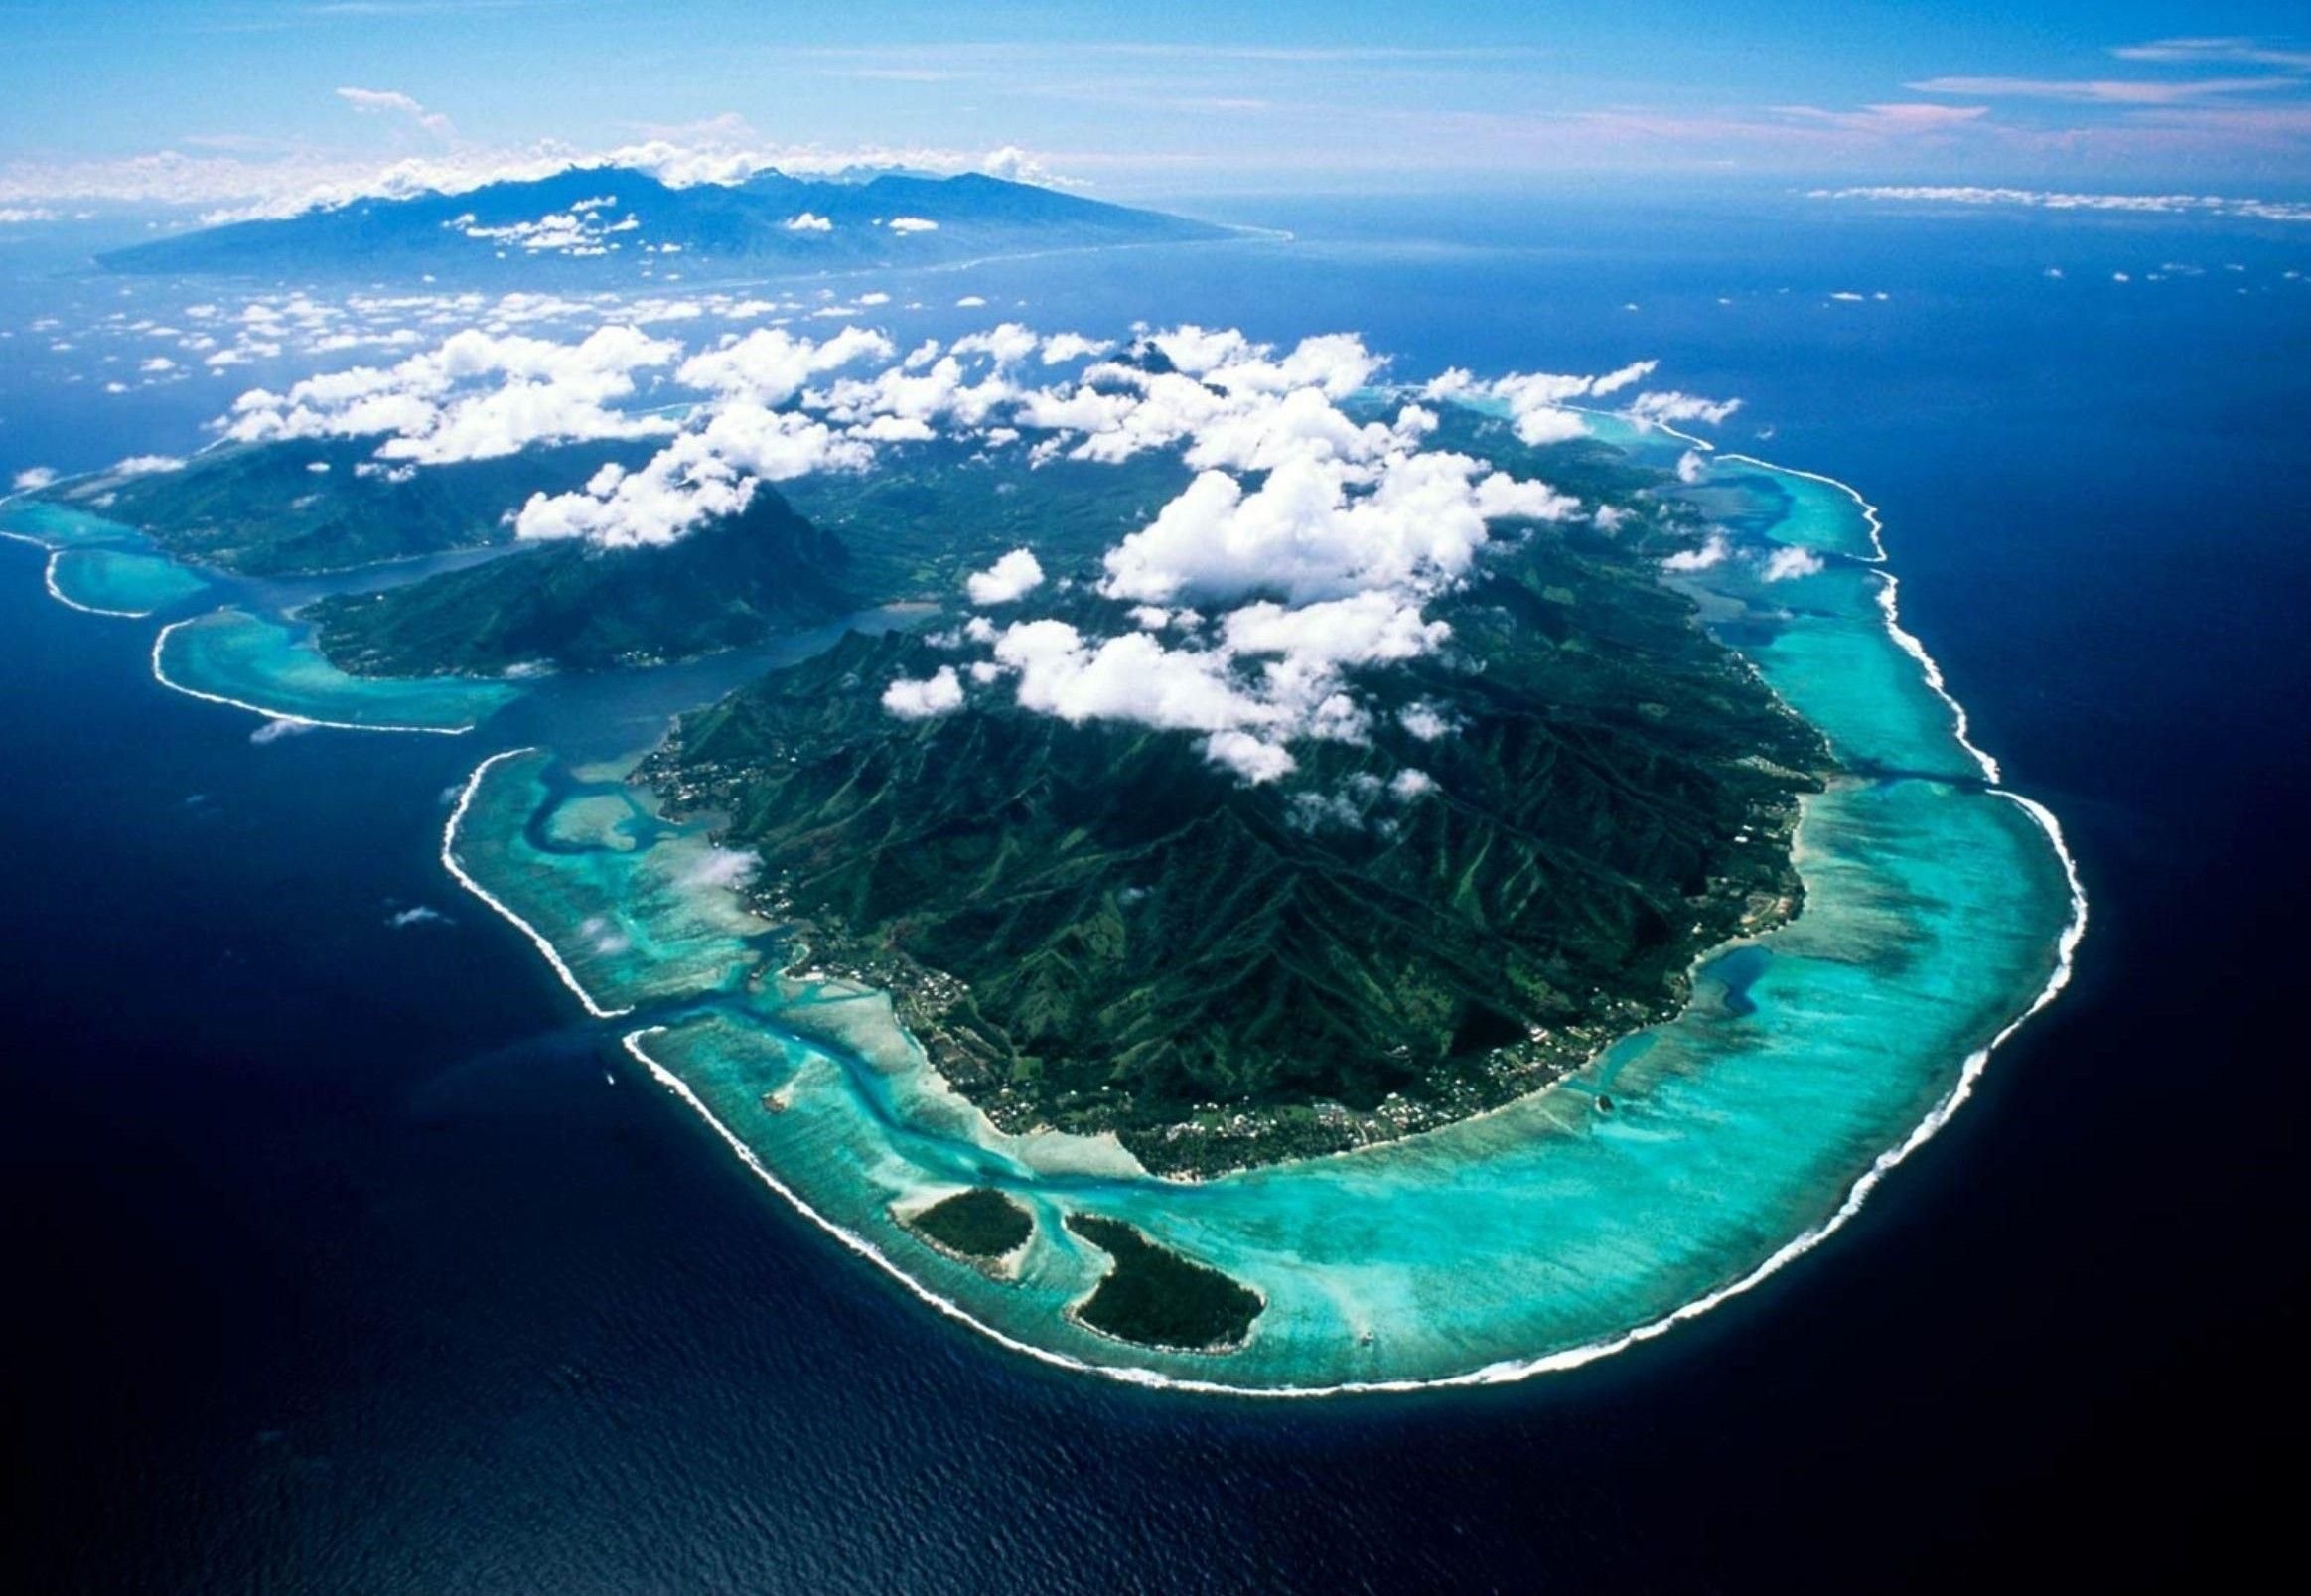 Форма тихого океана. Tahiti французская Полинезия. Муреа Таити. Таити остров архипелаг. Остров Марито французская Полинезия.